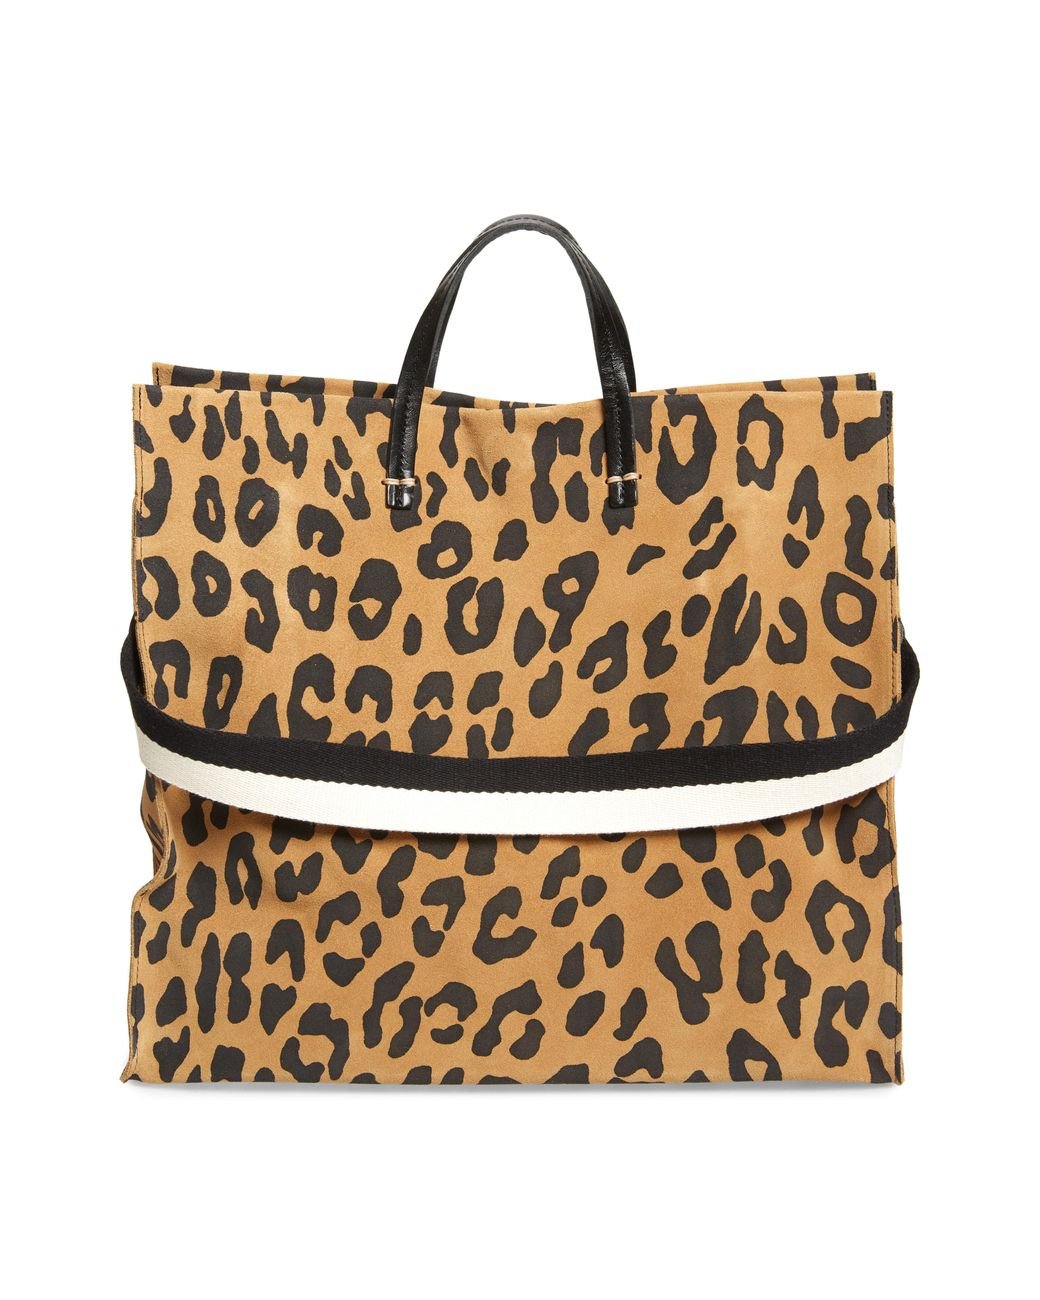 Clare V Helene bag in leopard print.